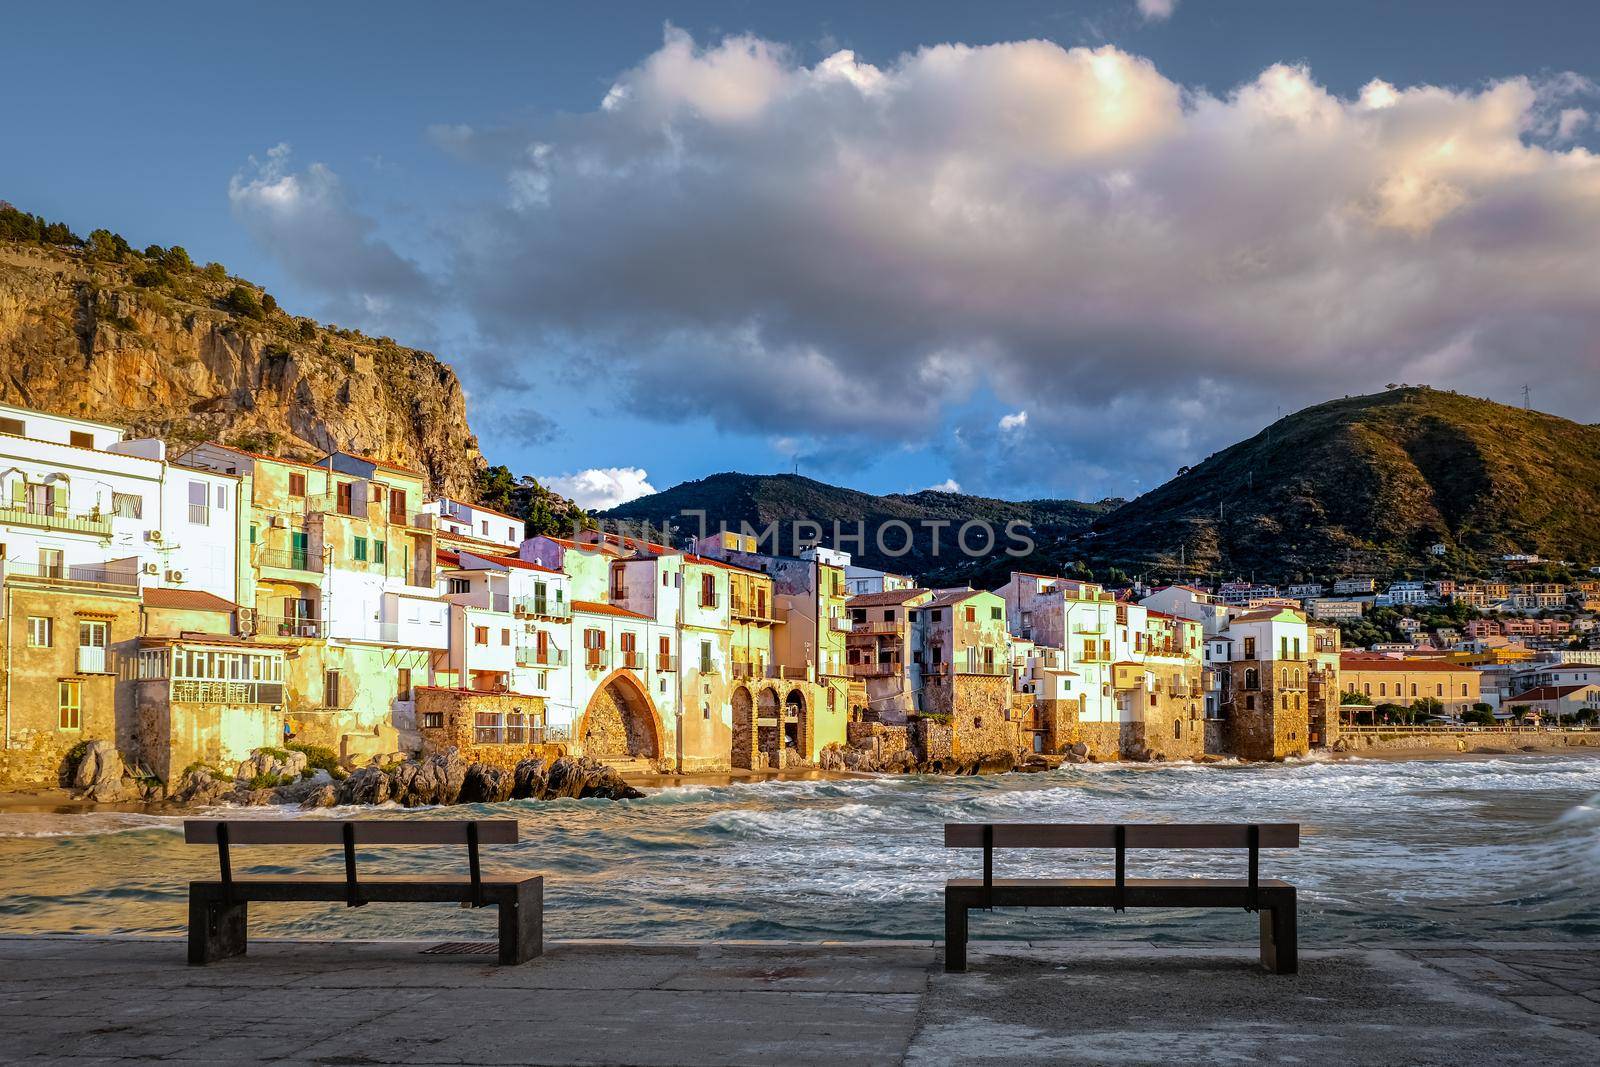 Cefalu, medieval village of Sicily island, Province of Palermo, Italy by fokkebok